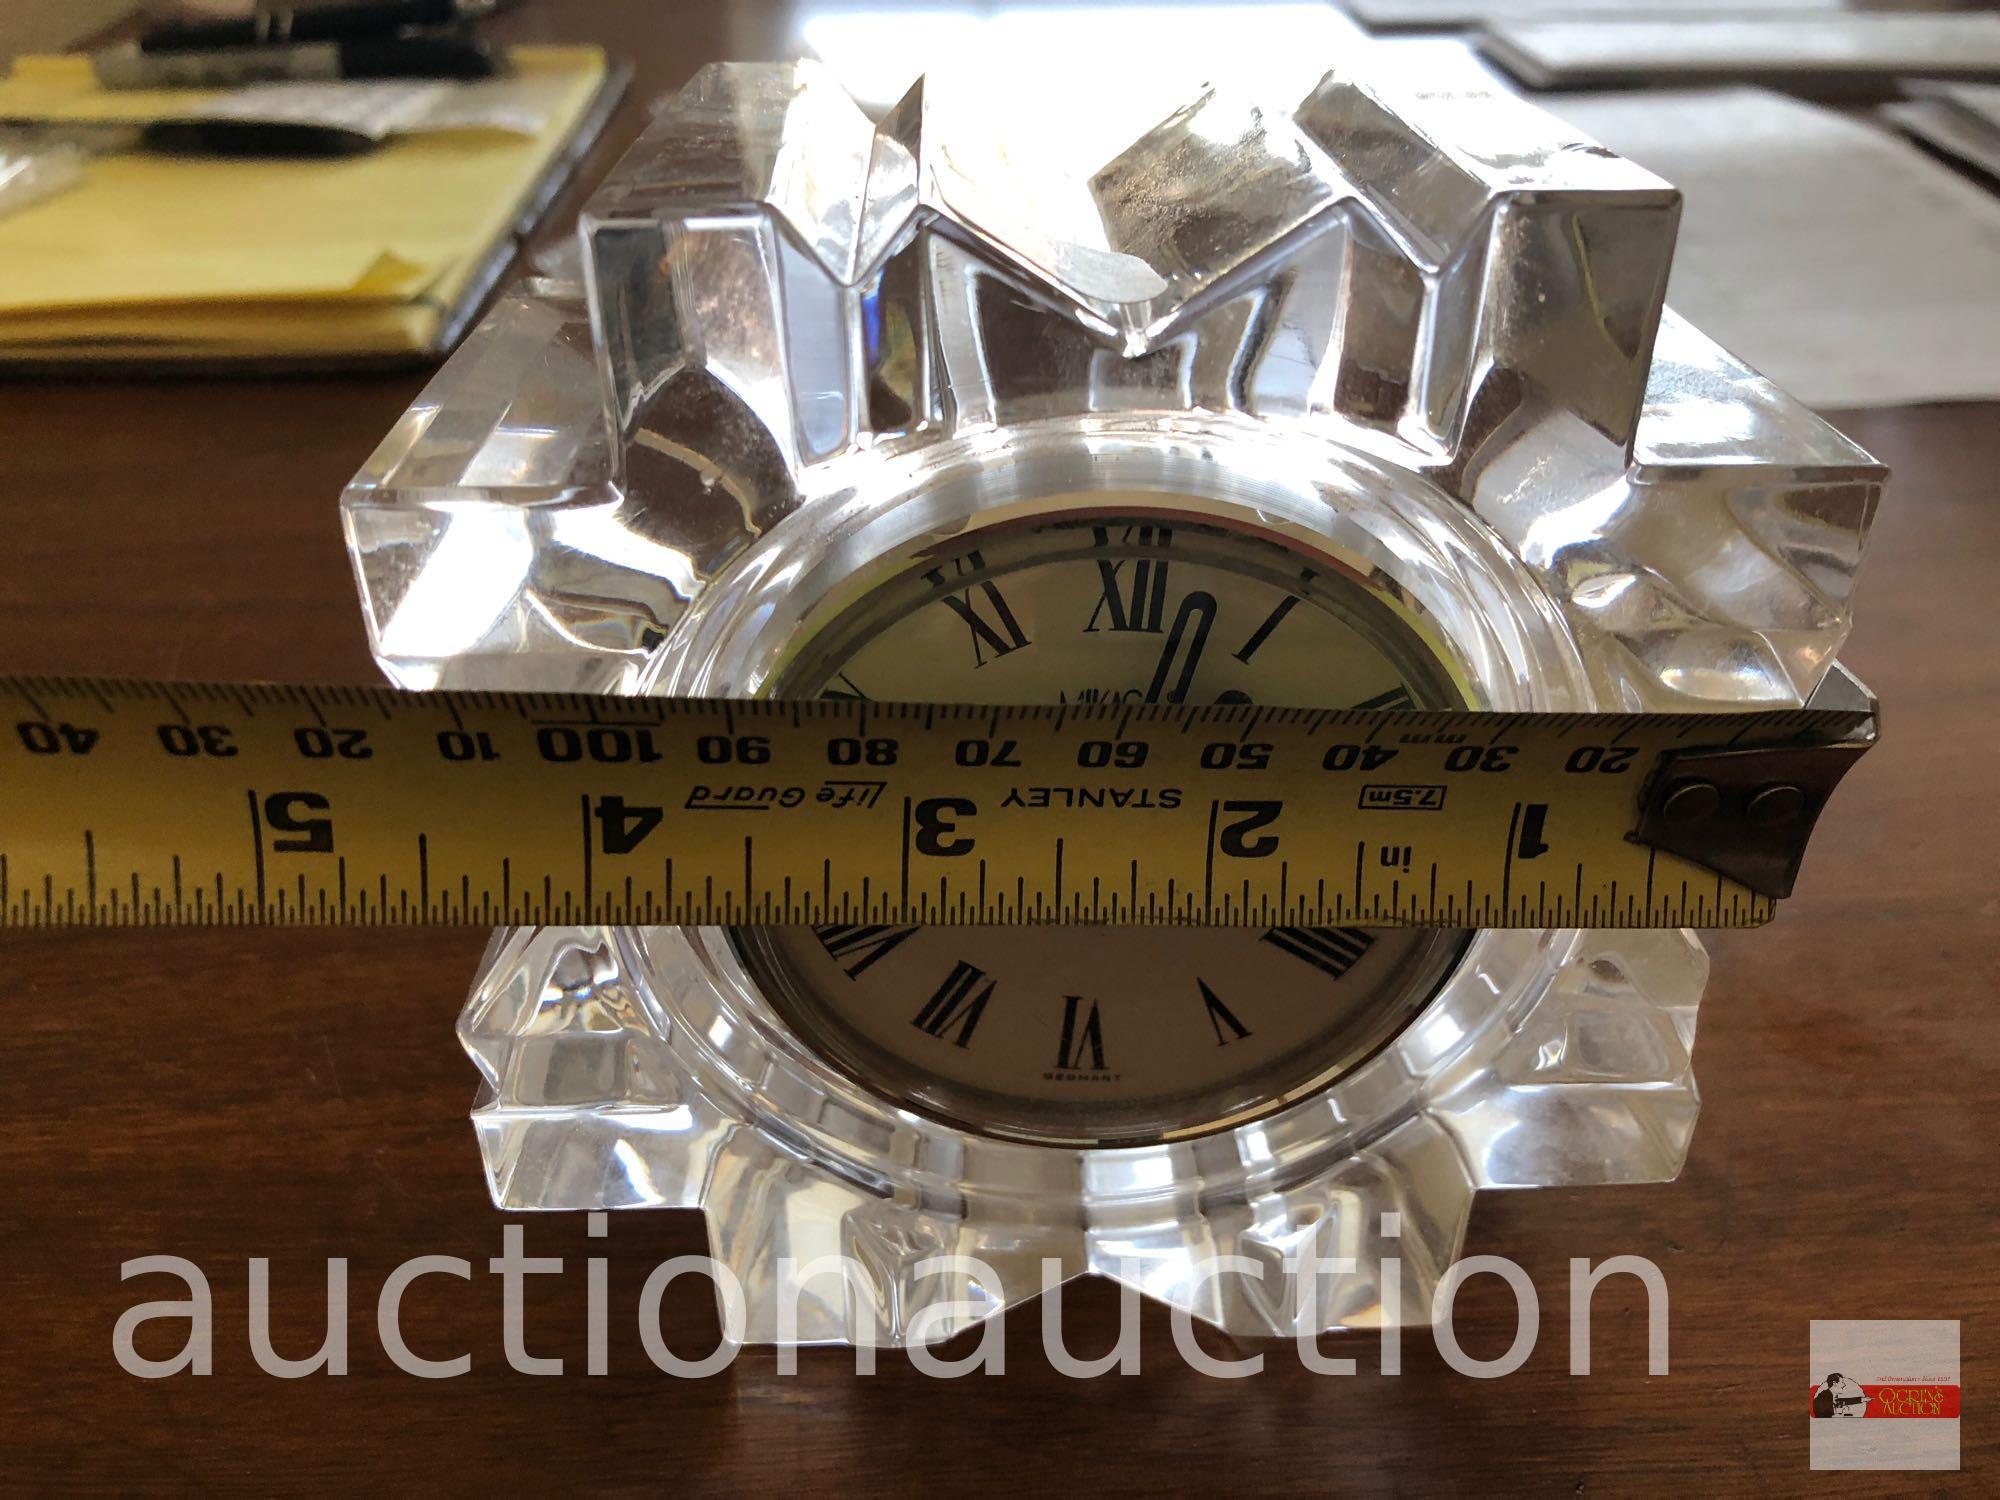 Clock - Mikasa Crystal dresser clock, Roman numerals, quartz, 4.5"wx5"h, sm. nick on 1 point